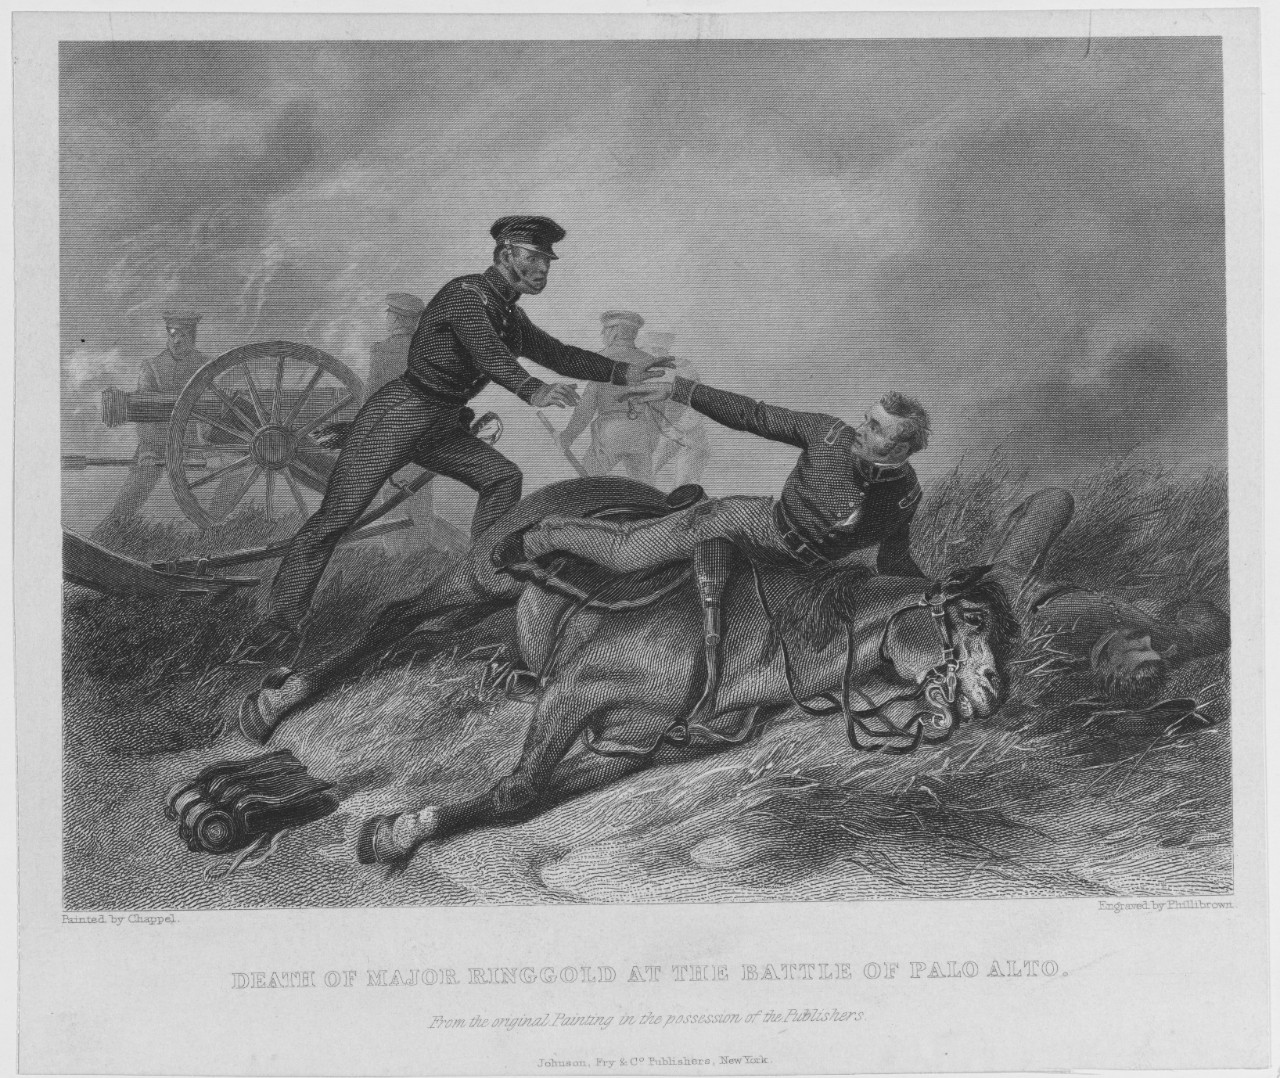 Death of Major Ringgold at the Battle of Palo Alto. May 8, 1846